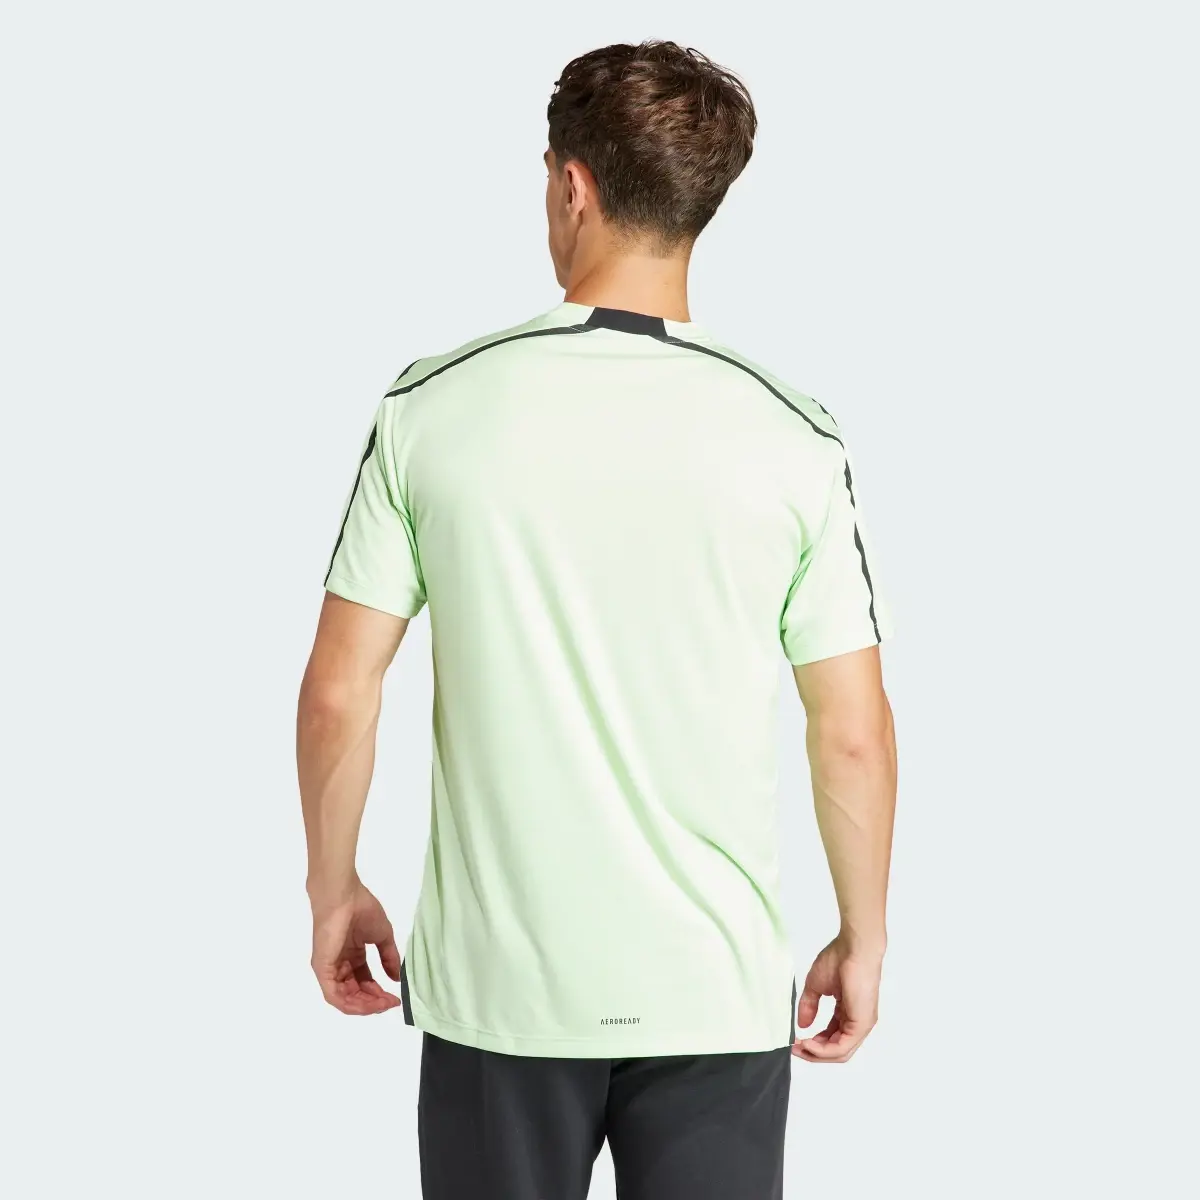 Adidas Koszulka Designed for Training Adistrong Workout. 3